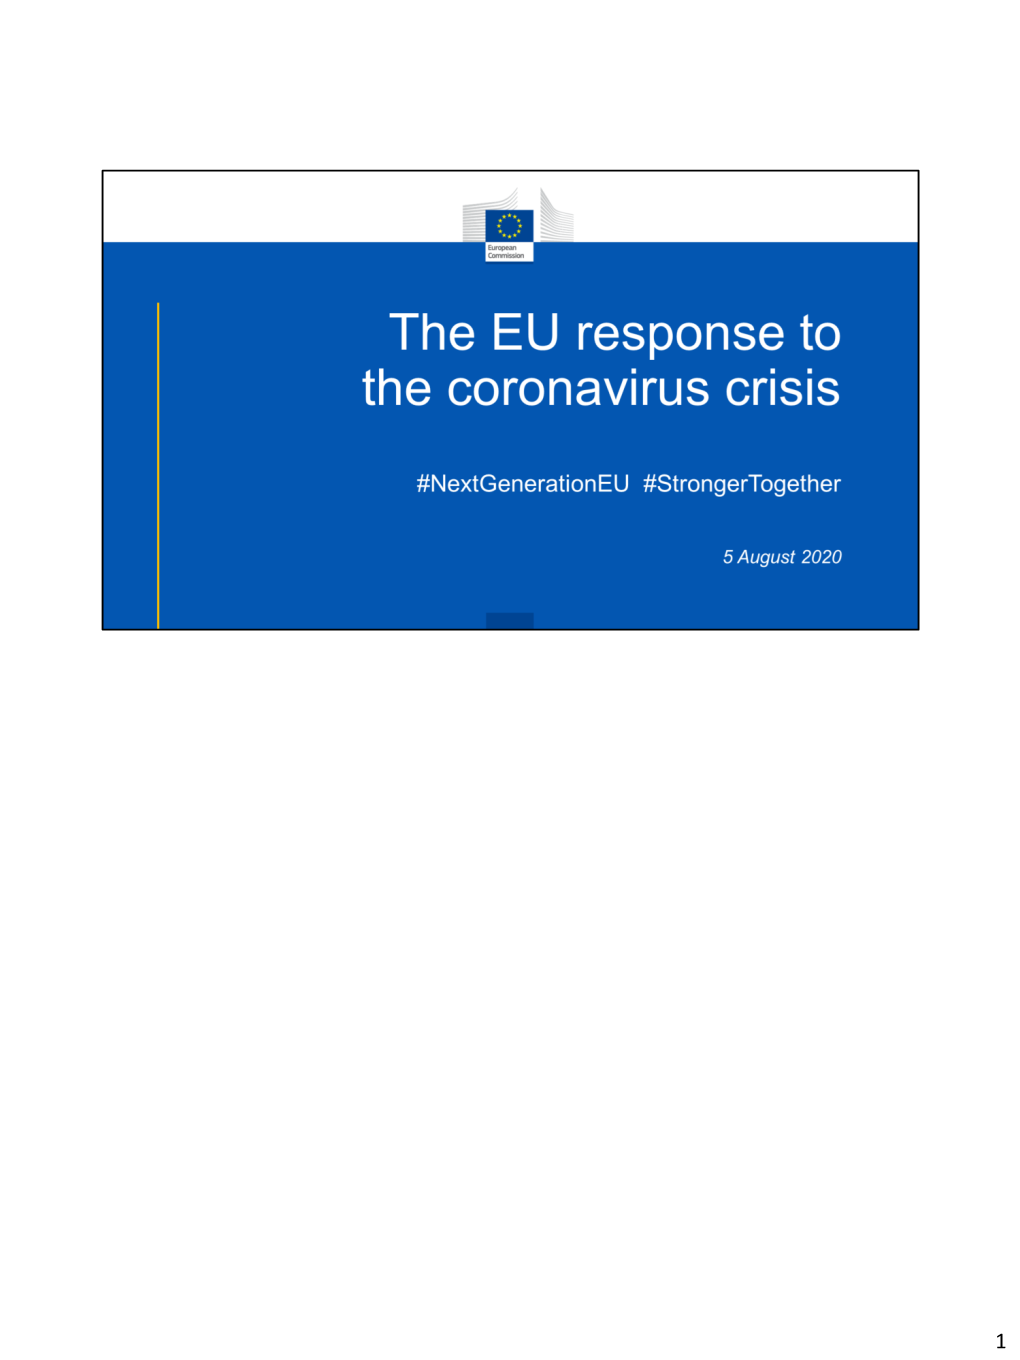 The EU Response to the Coronavirus Crisis